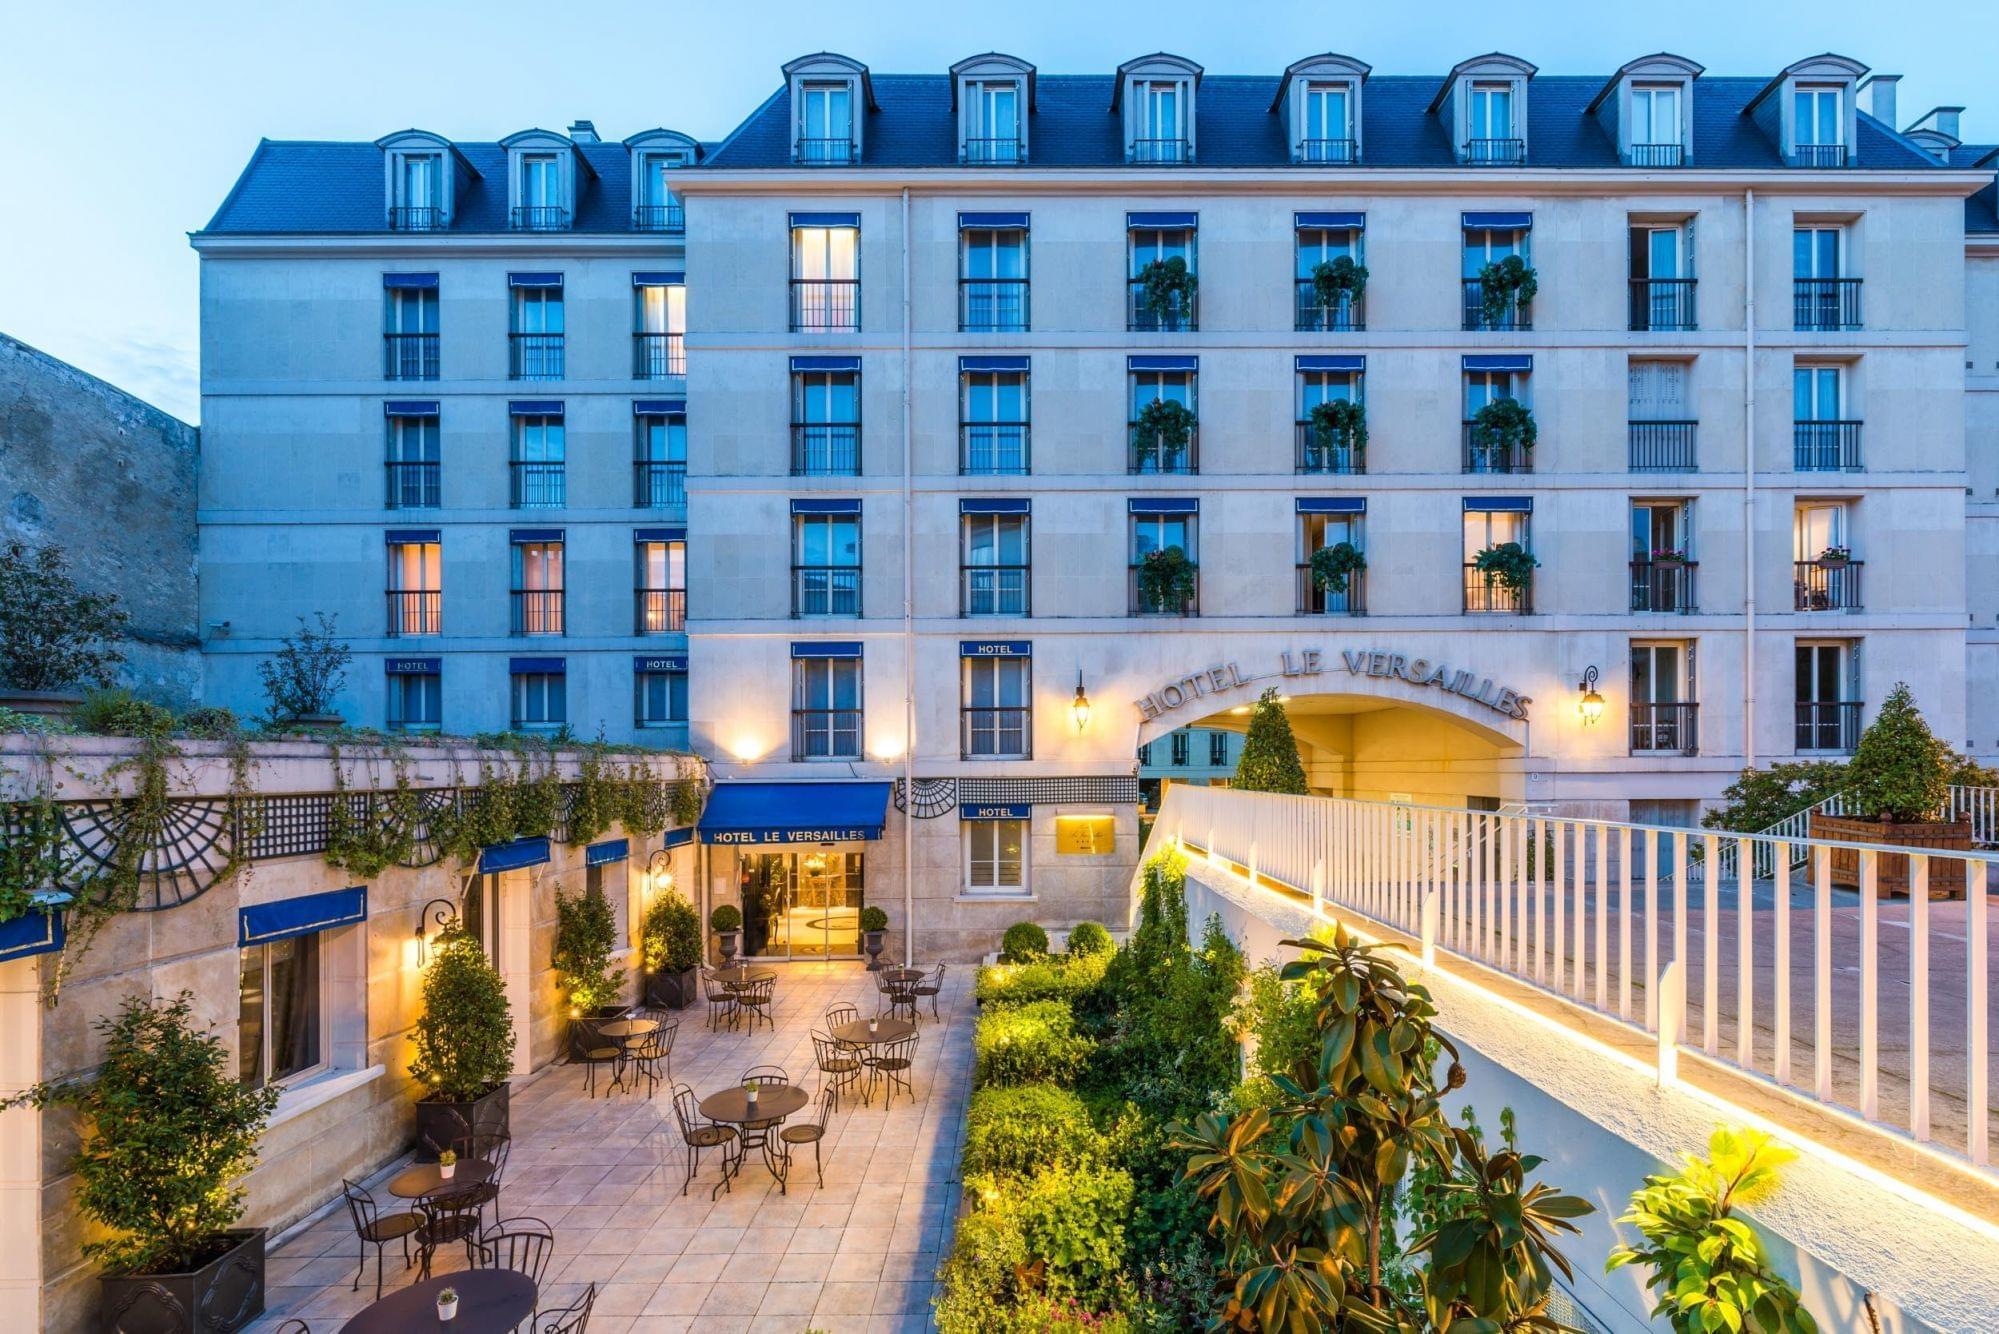 Hotels in Versailles